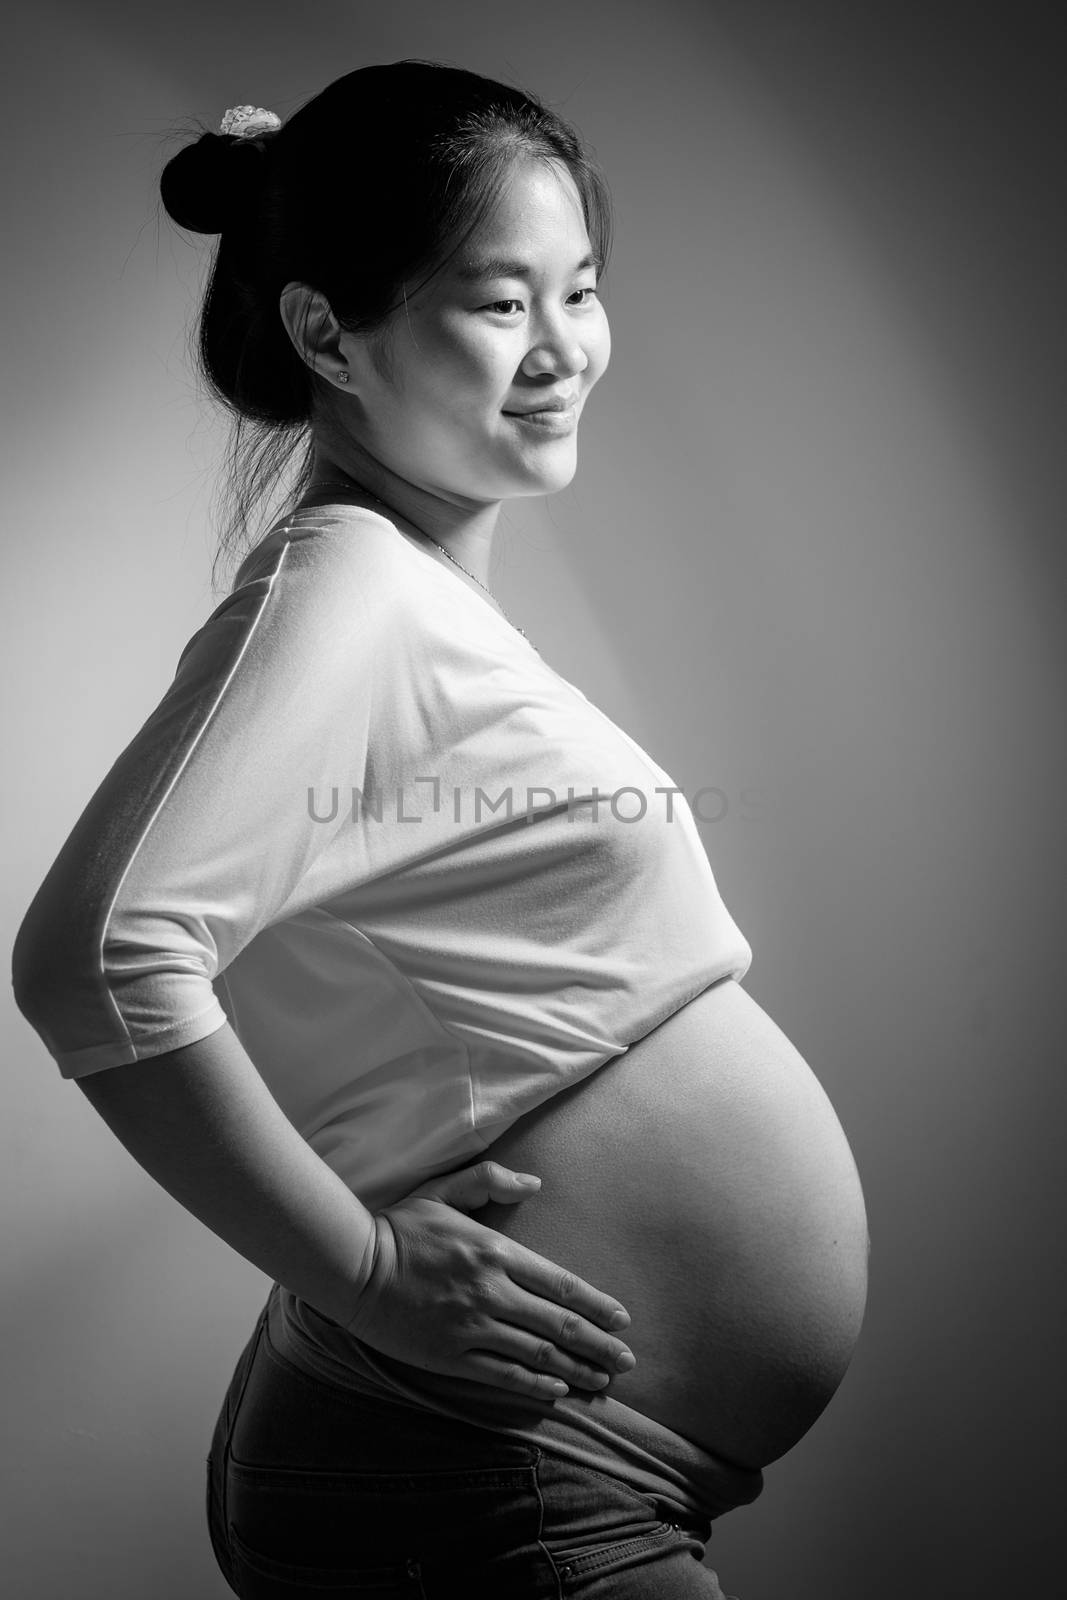 Asian pregnant woman by zneb076